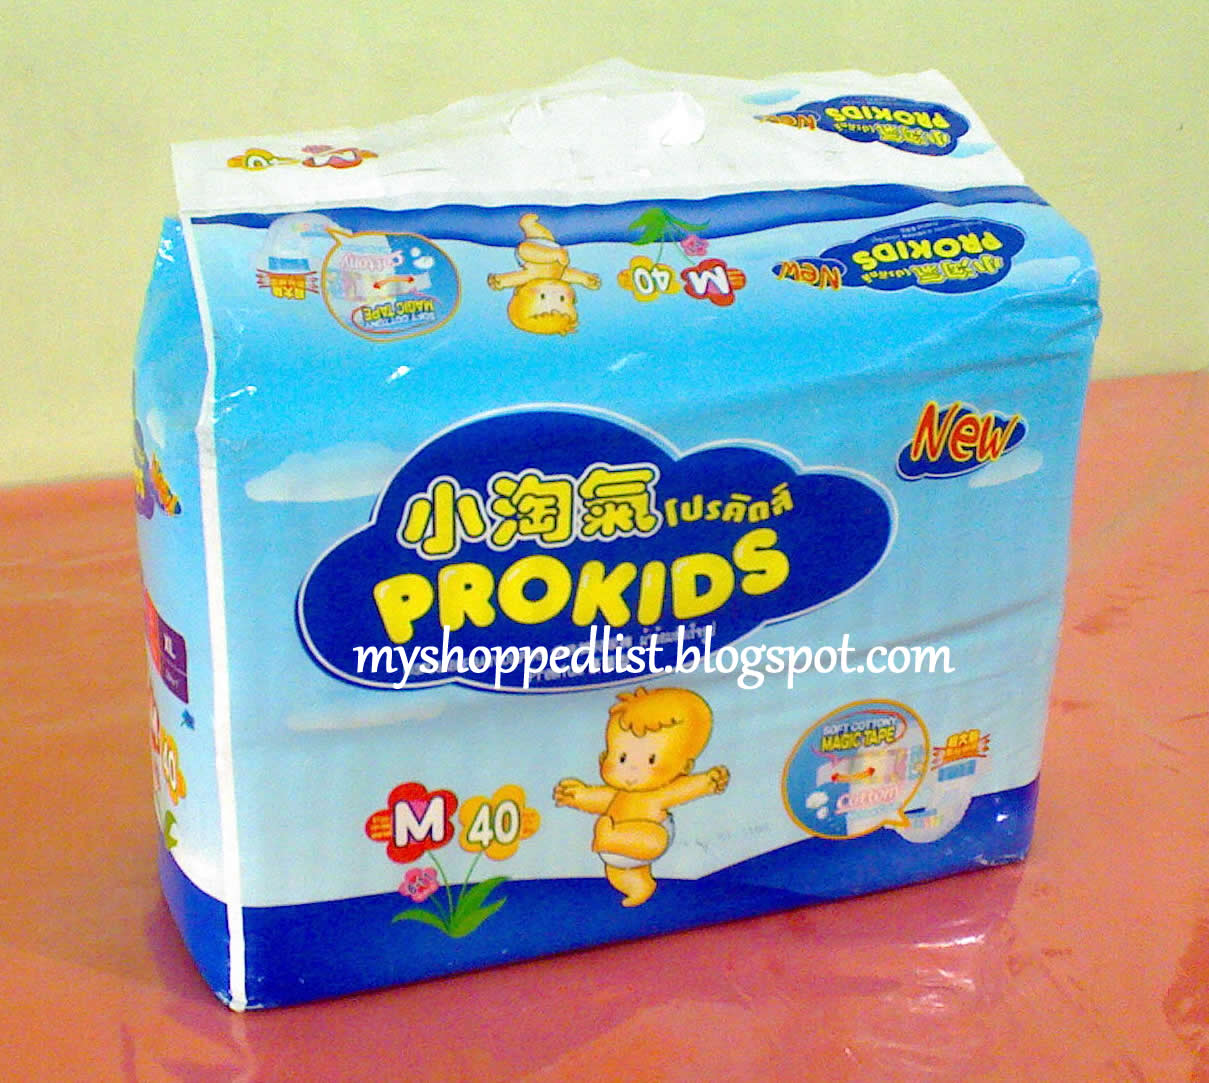 Prokids Disposable Baby Diaper - My Shopped List.